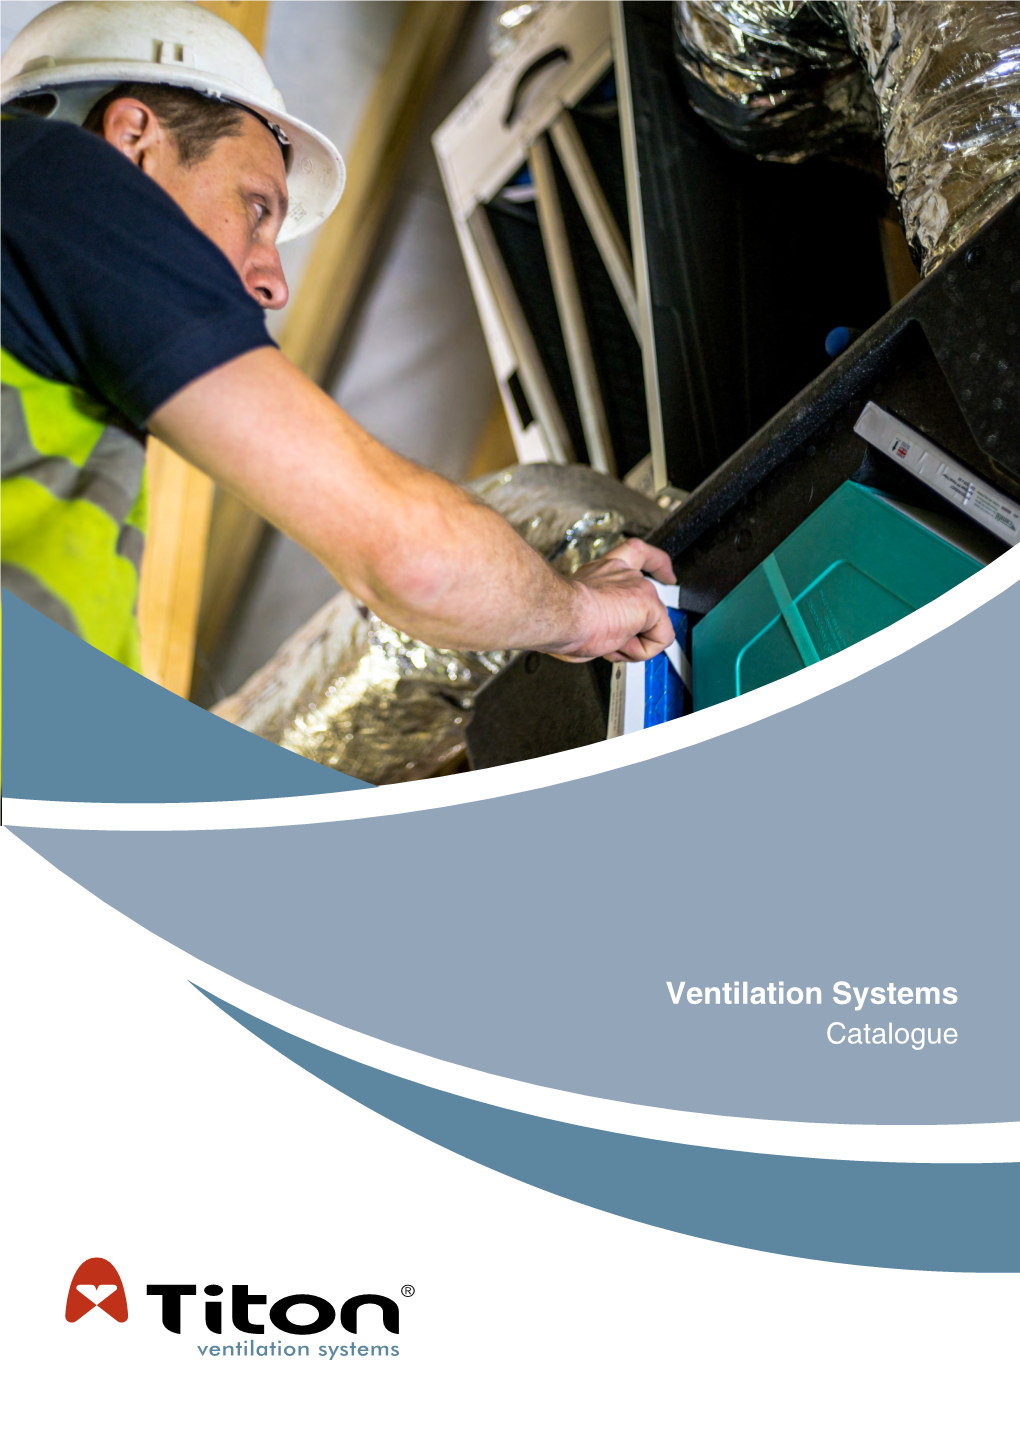 Ventilation Systems Catalogue Contents